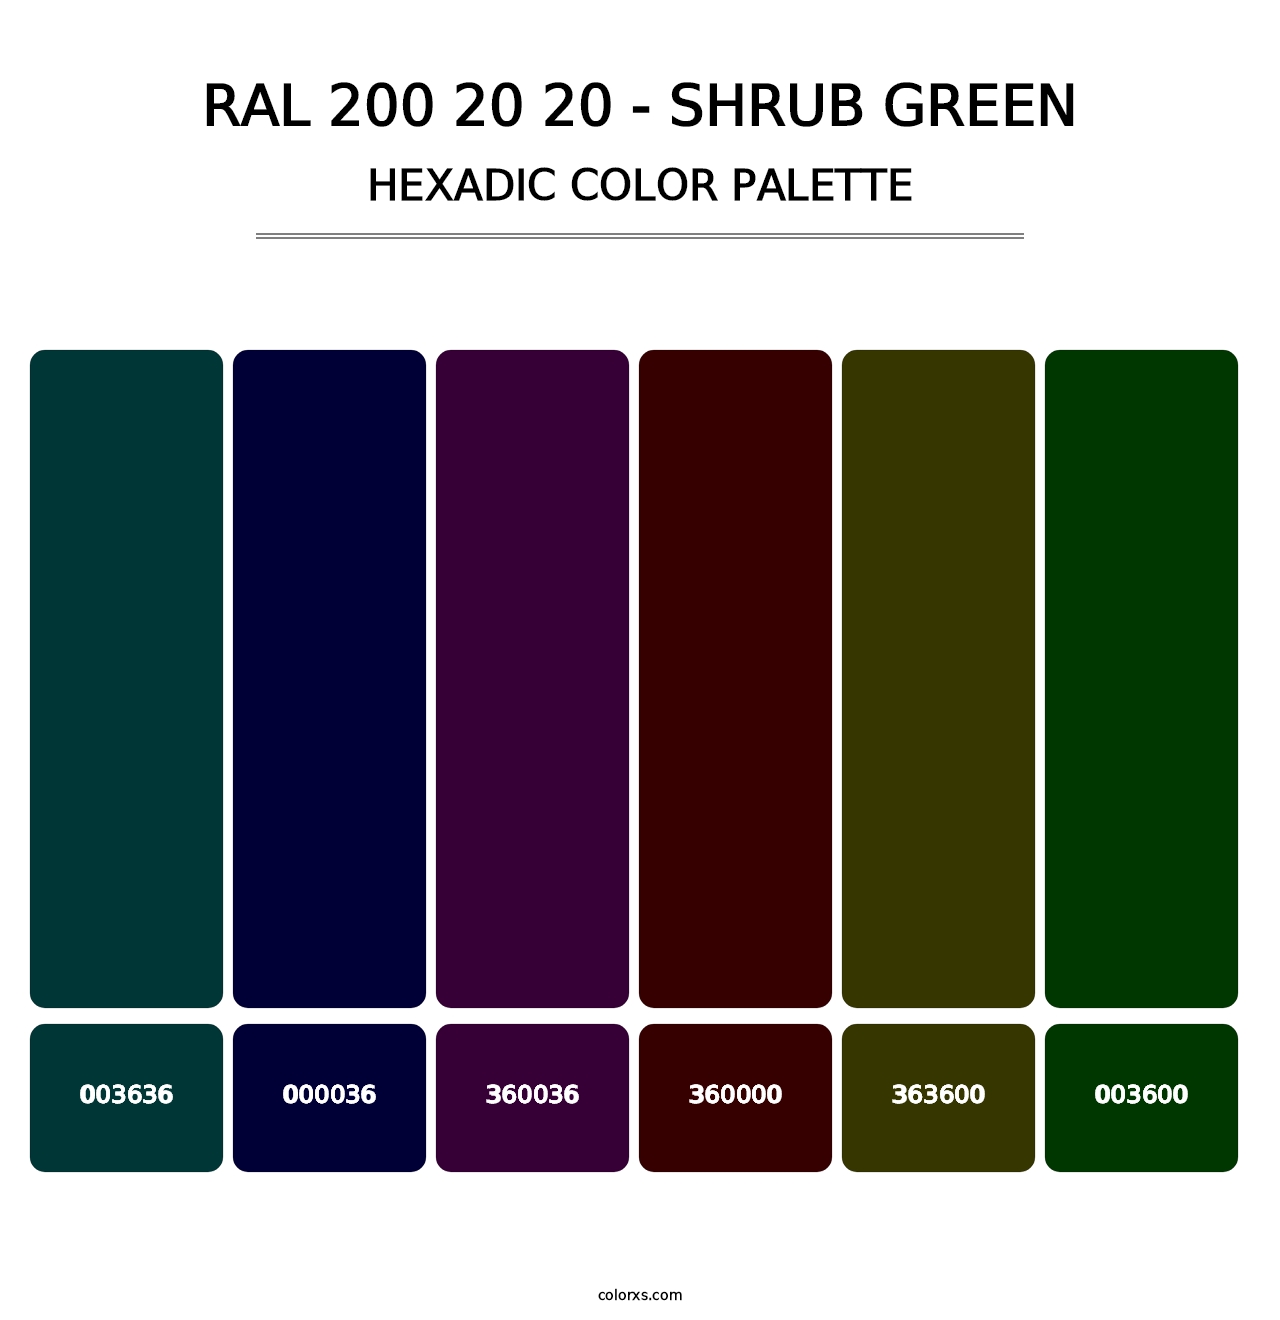 RAL 200 20 20 - Shrub Green - Hexadic Color Palette